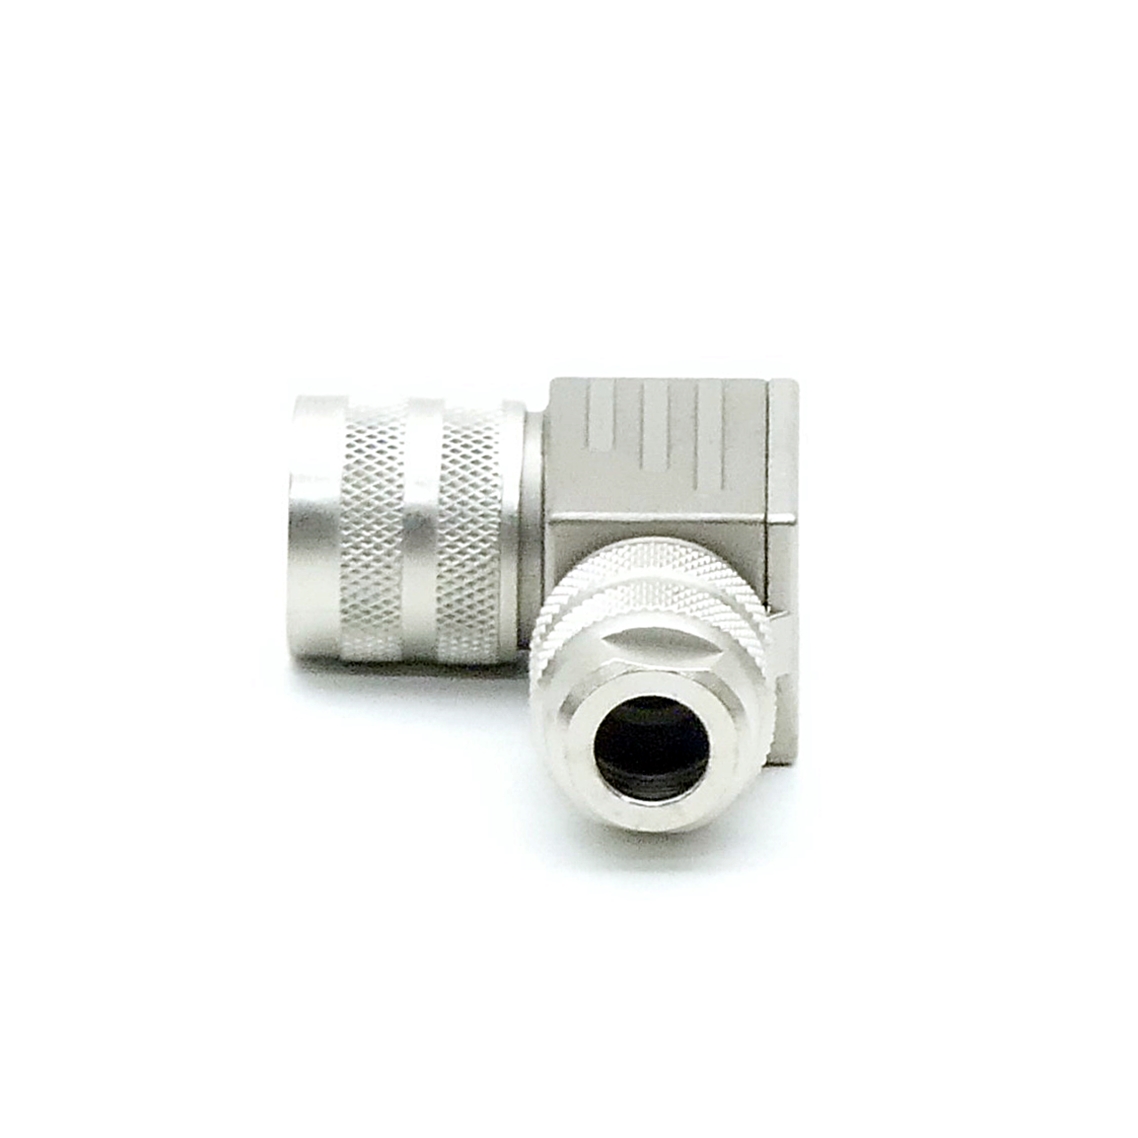 3 Stück Miniatur Steckverbinder 